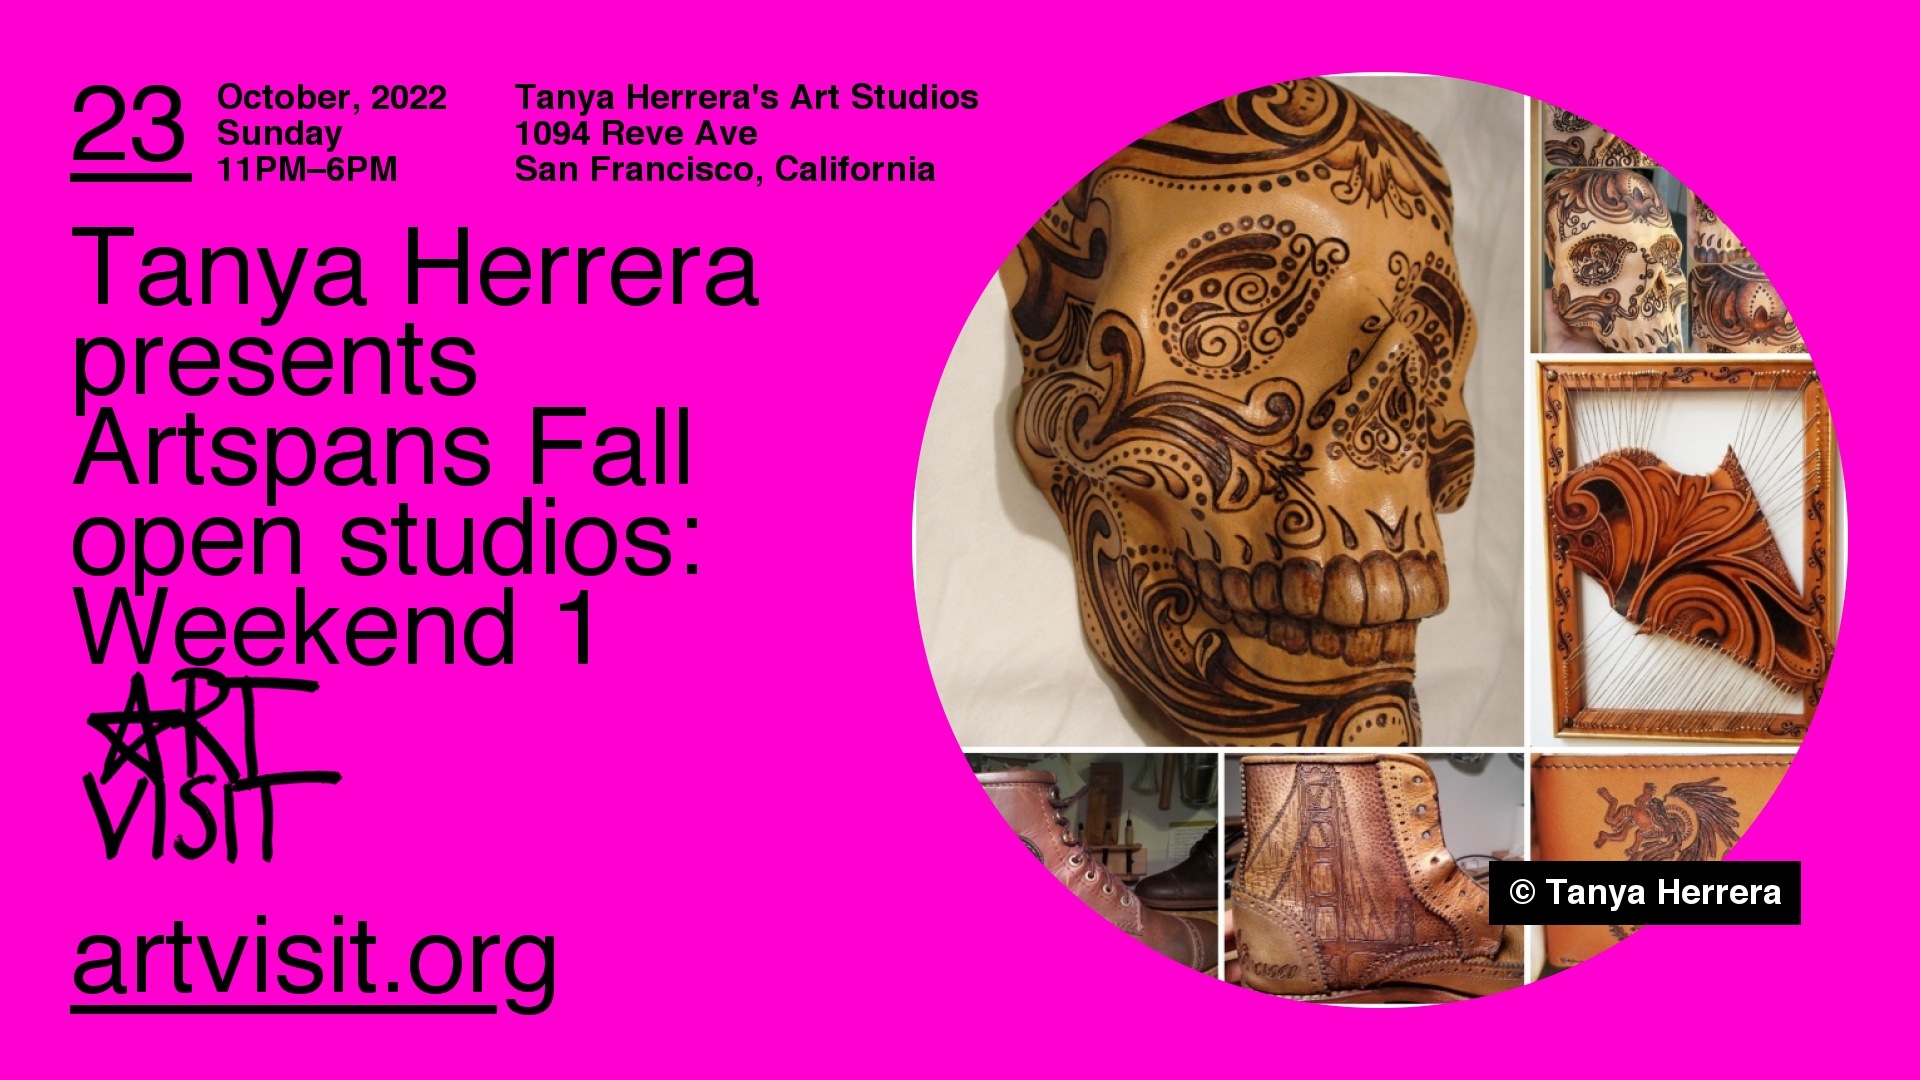 Tanya Herrera presents Artspans Fall open studios: Weekend 1